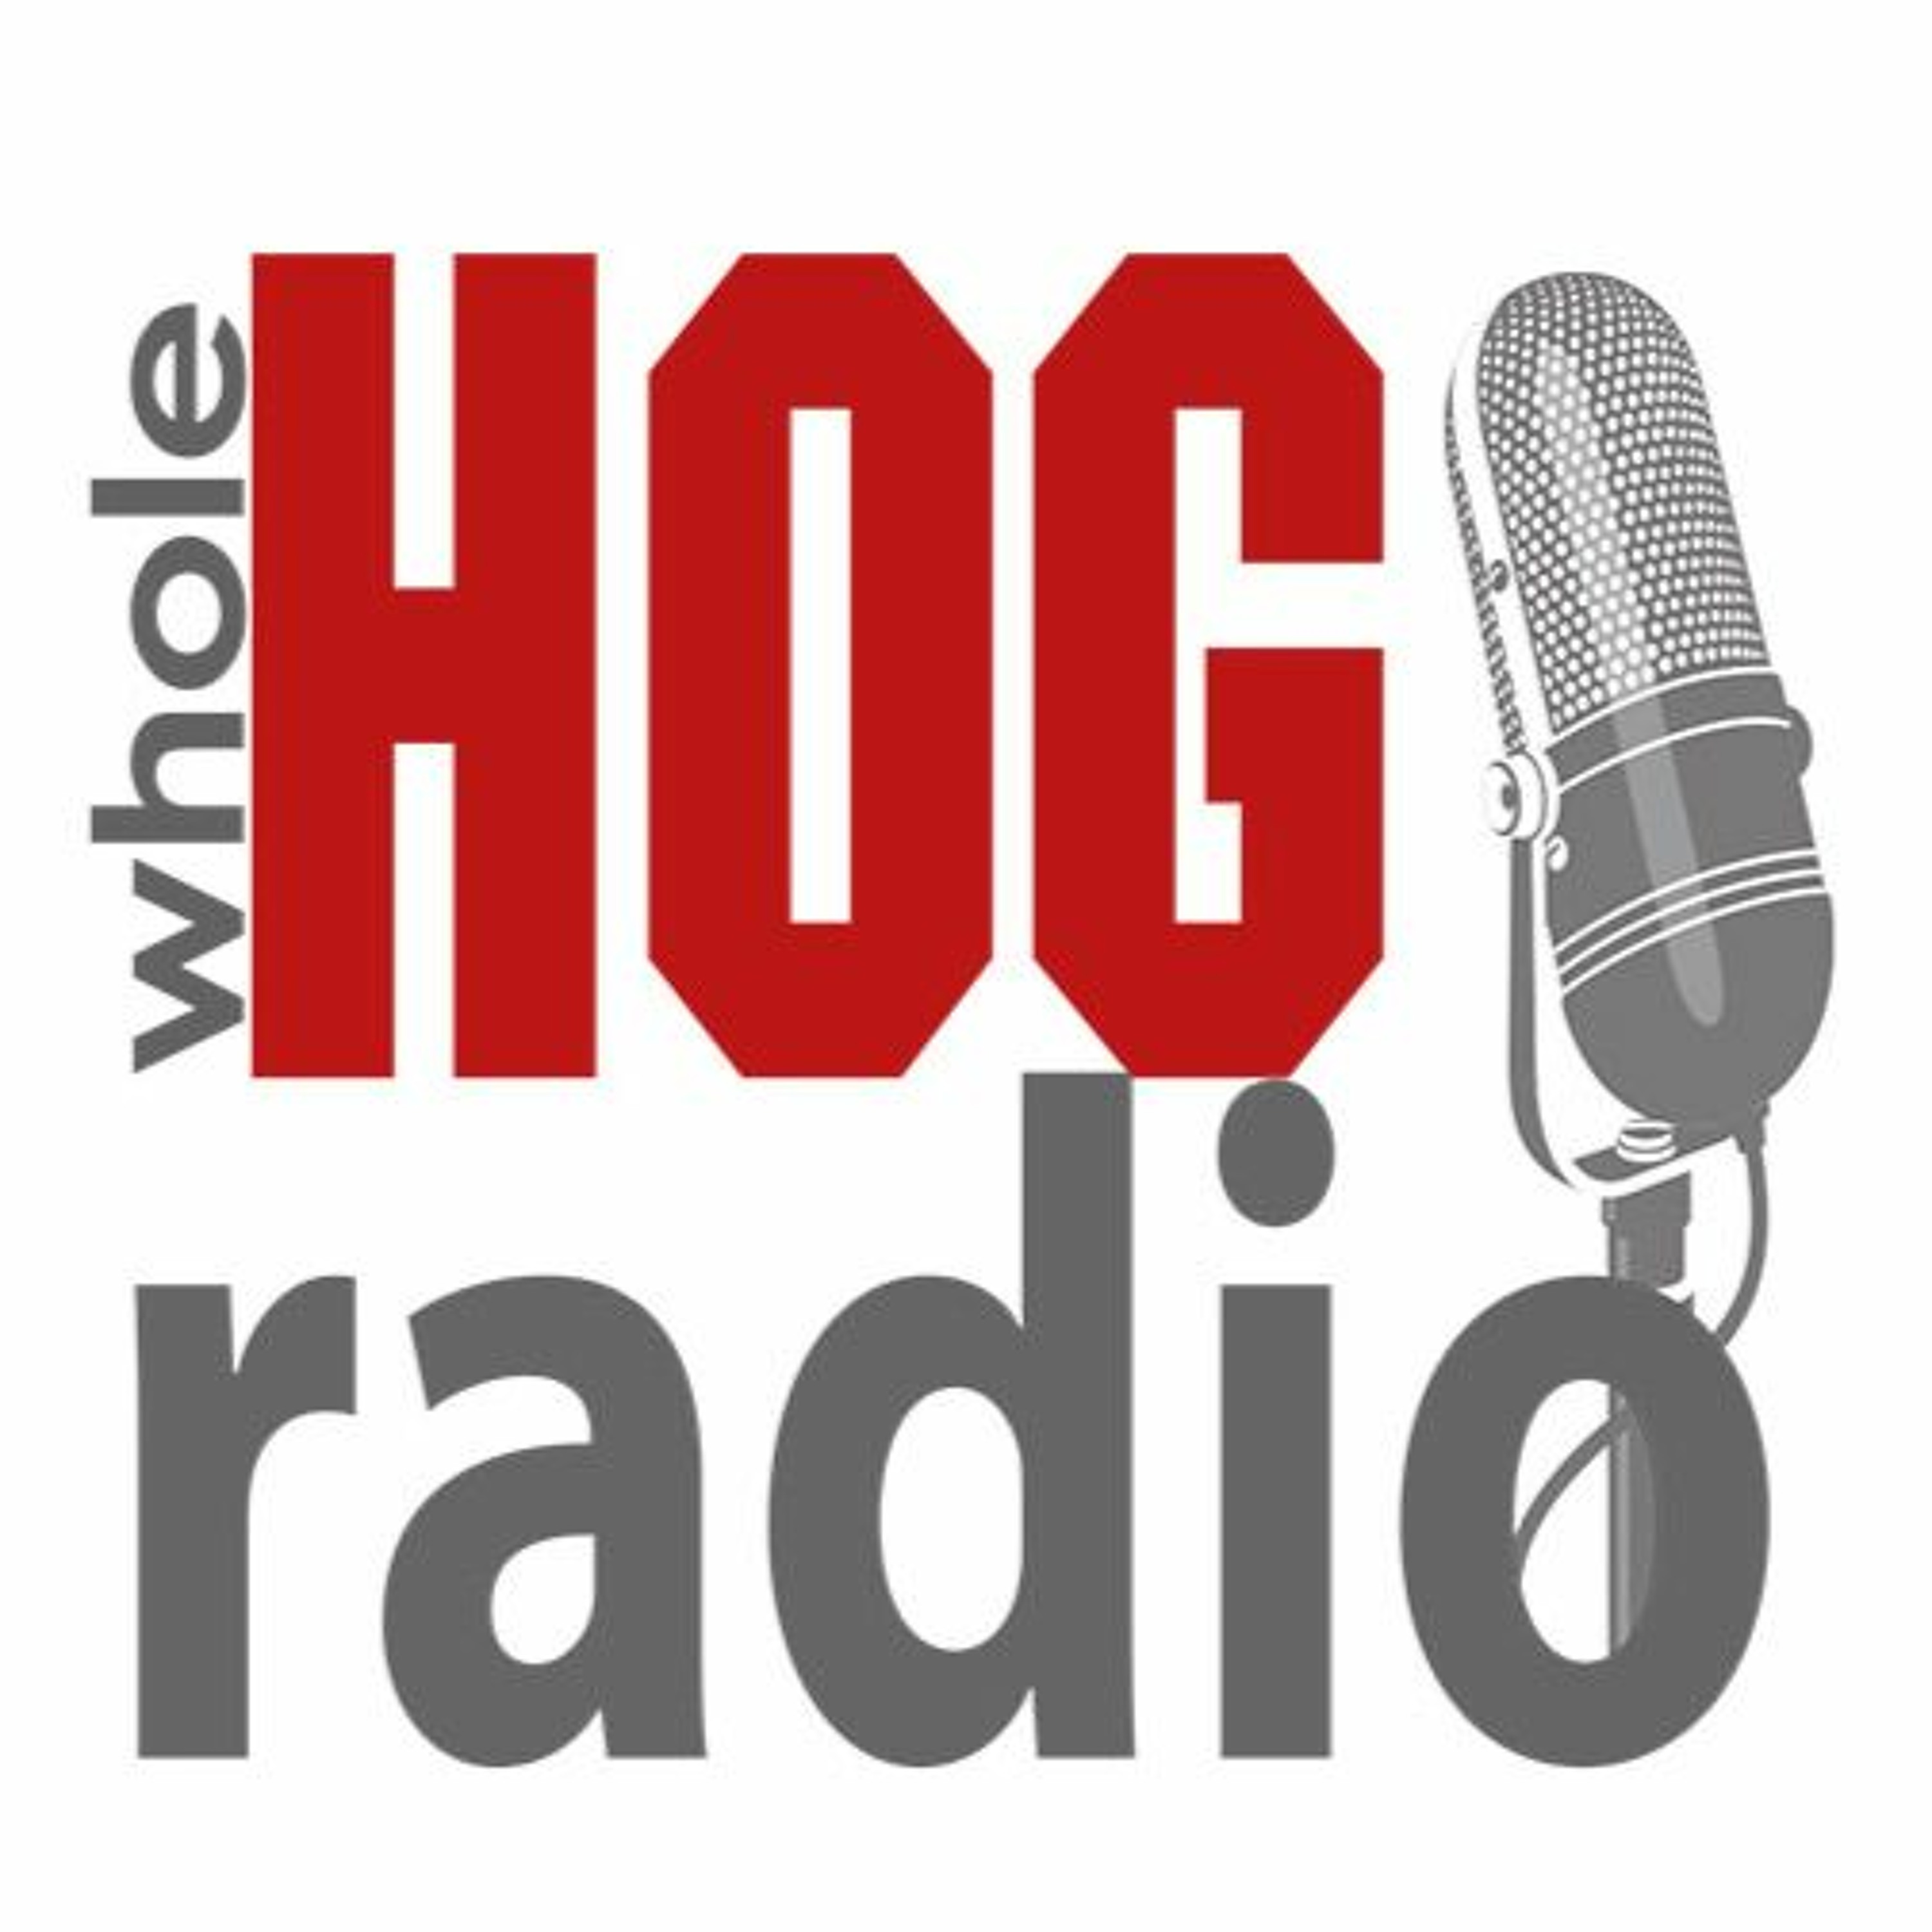 WholeHog Podcast: Arkansas vs. Texas A&M Reaction